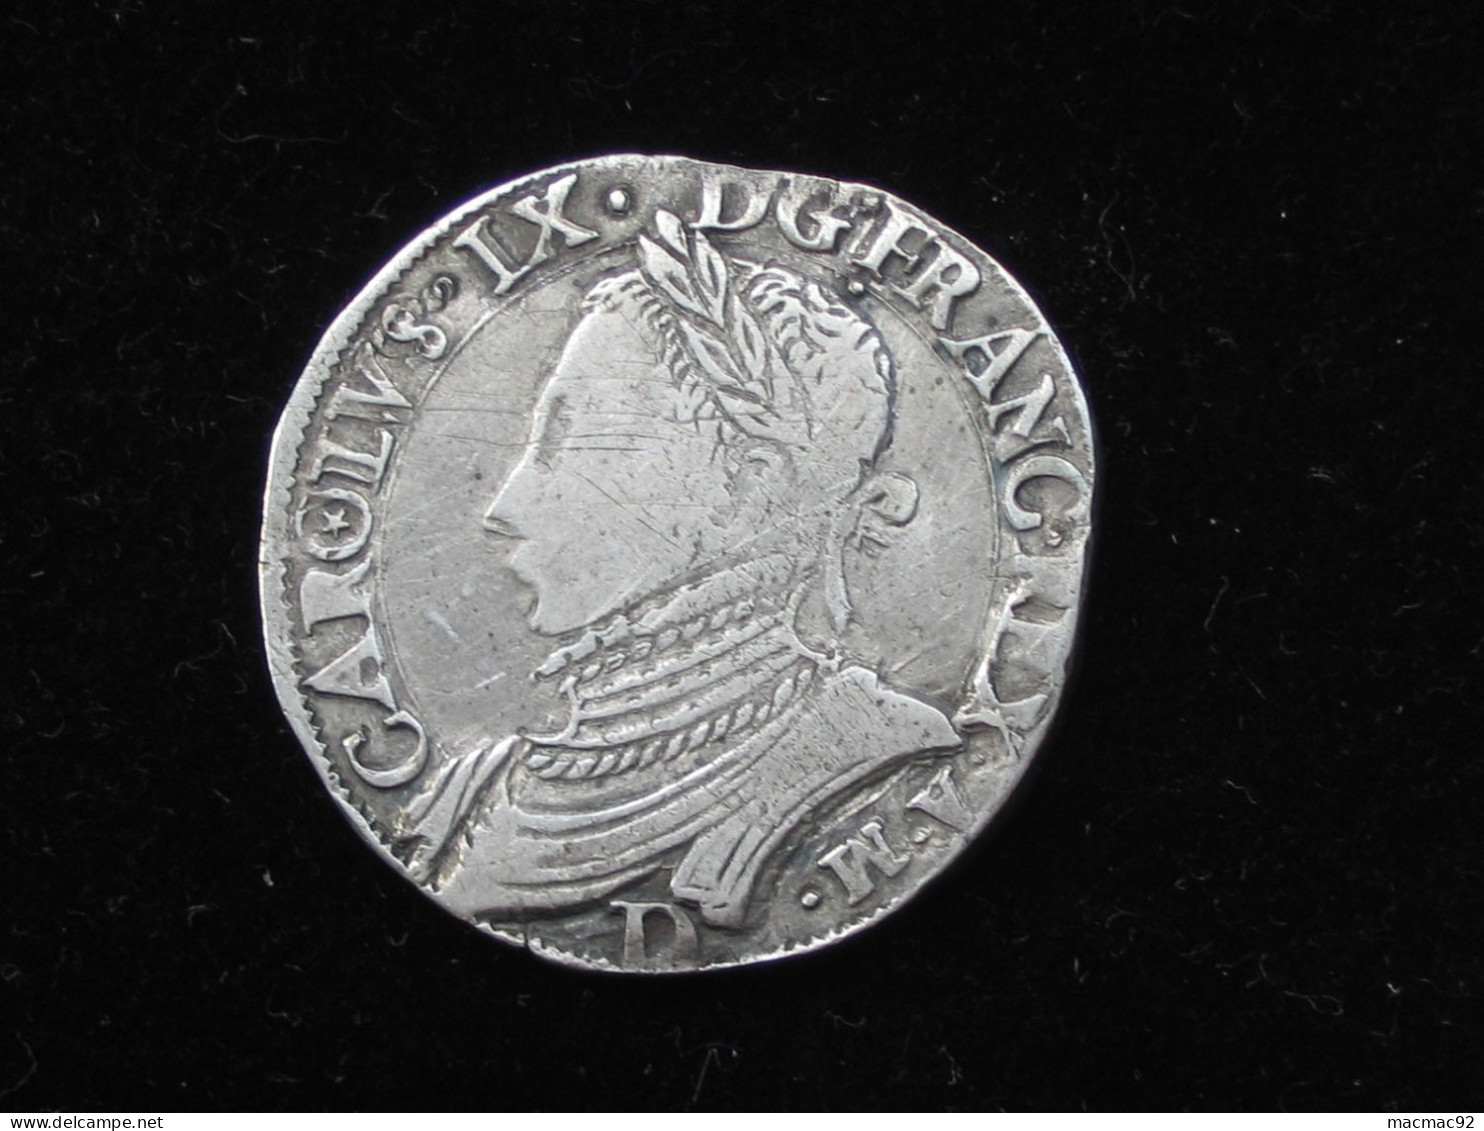 HENRI III. MONNAYAGE AU NOM DE CHARLES IX TESTON, 11e Type 1575 Lyon   **** EN ACHAT IMMEDIAT **** - 1574-1589 Henri III